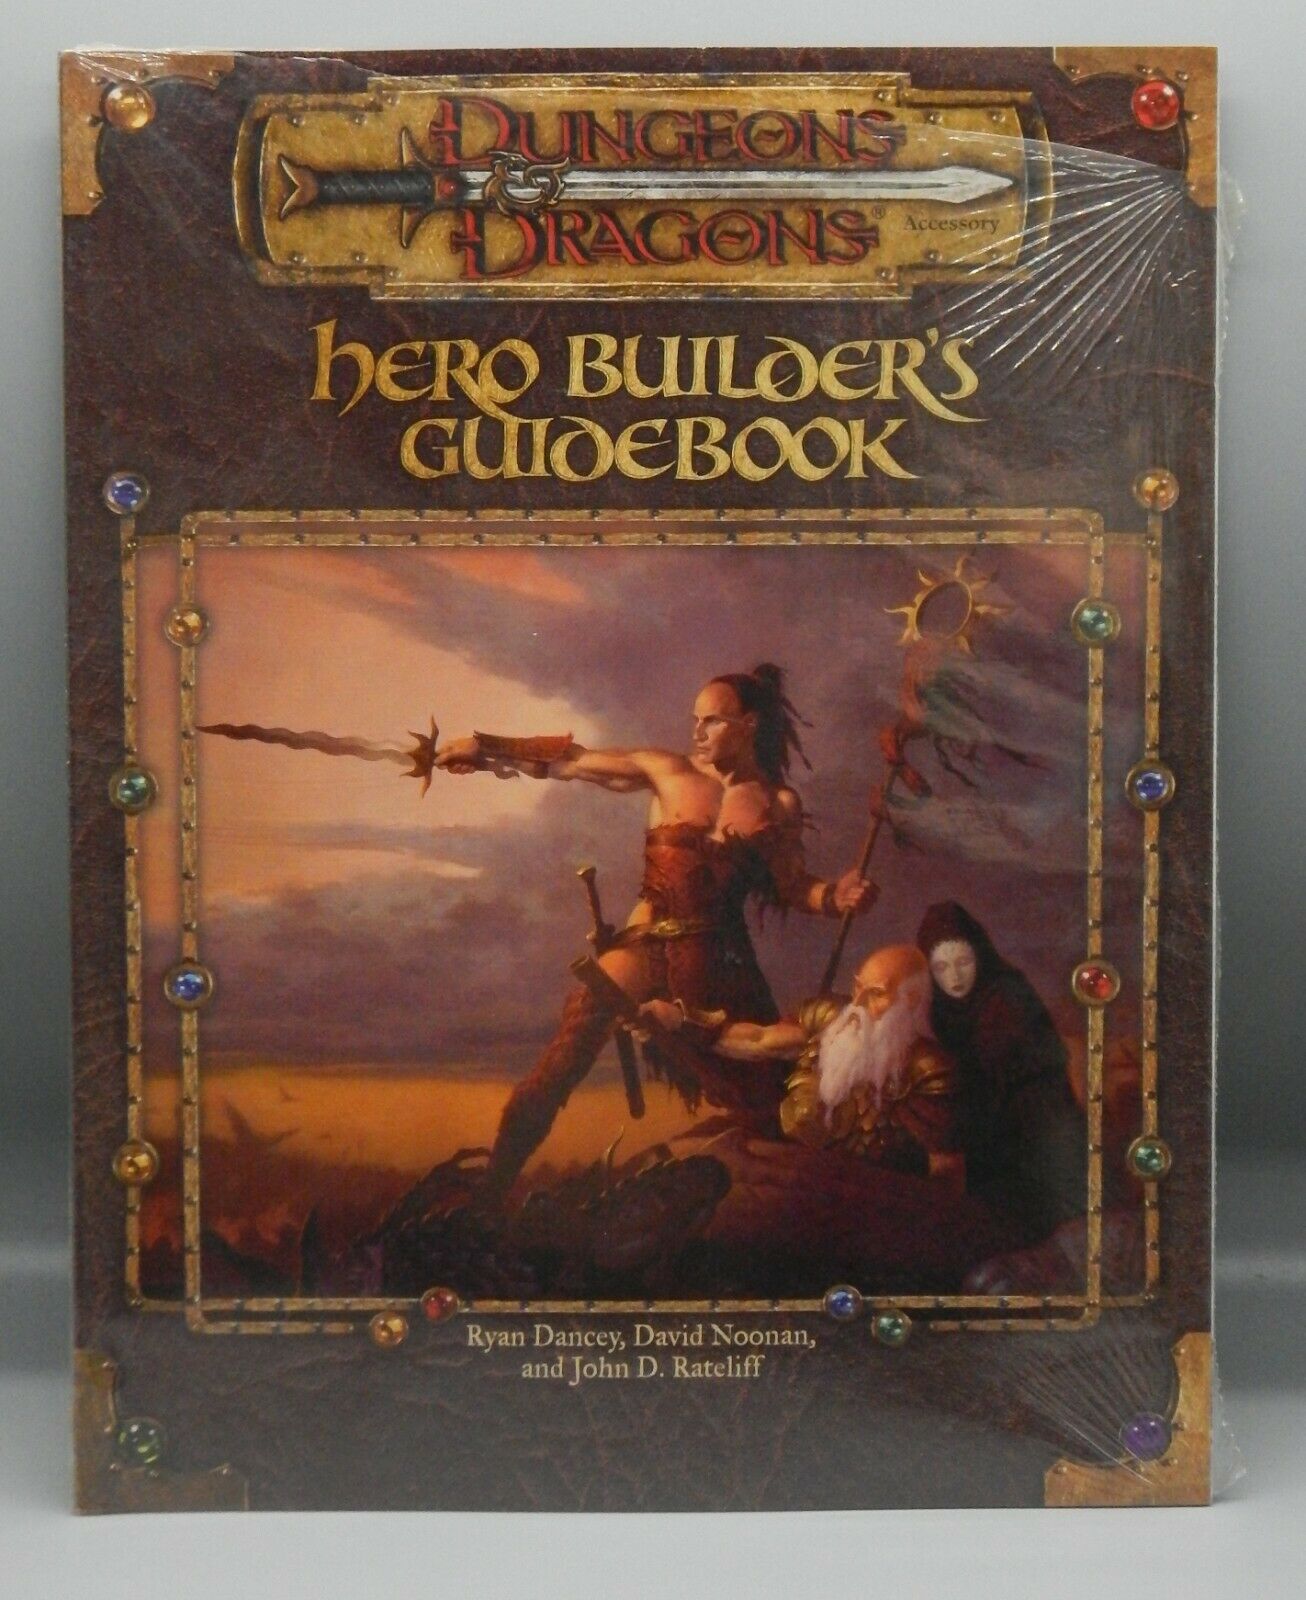 Dungeons & Dragons Hero Bulder Guidebook Guide Book Sealed Wotc D20 3e 3.5 Nice!